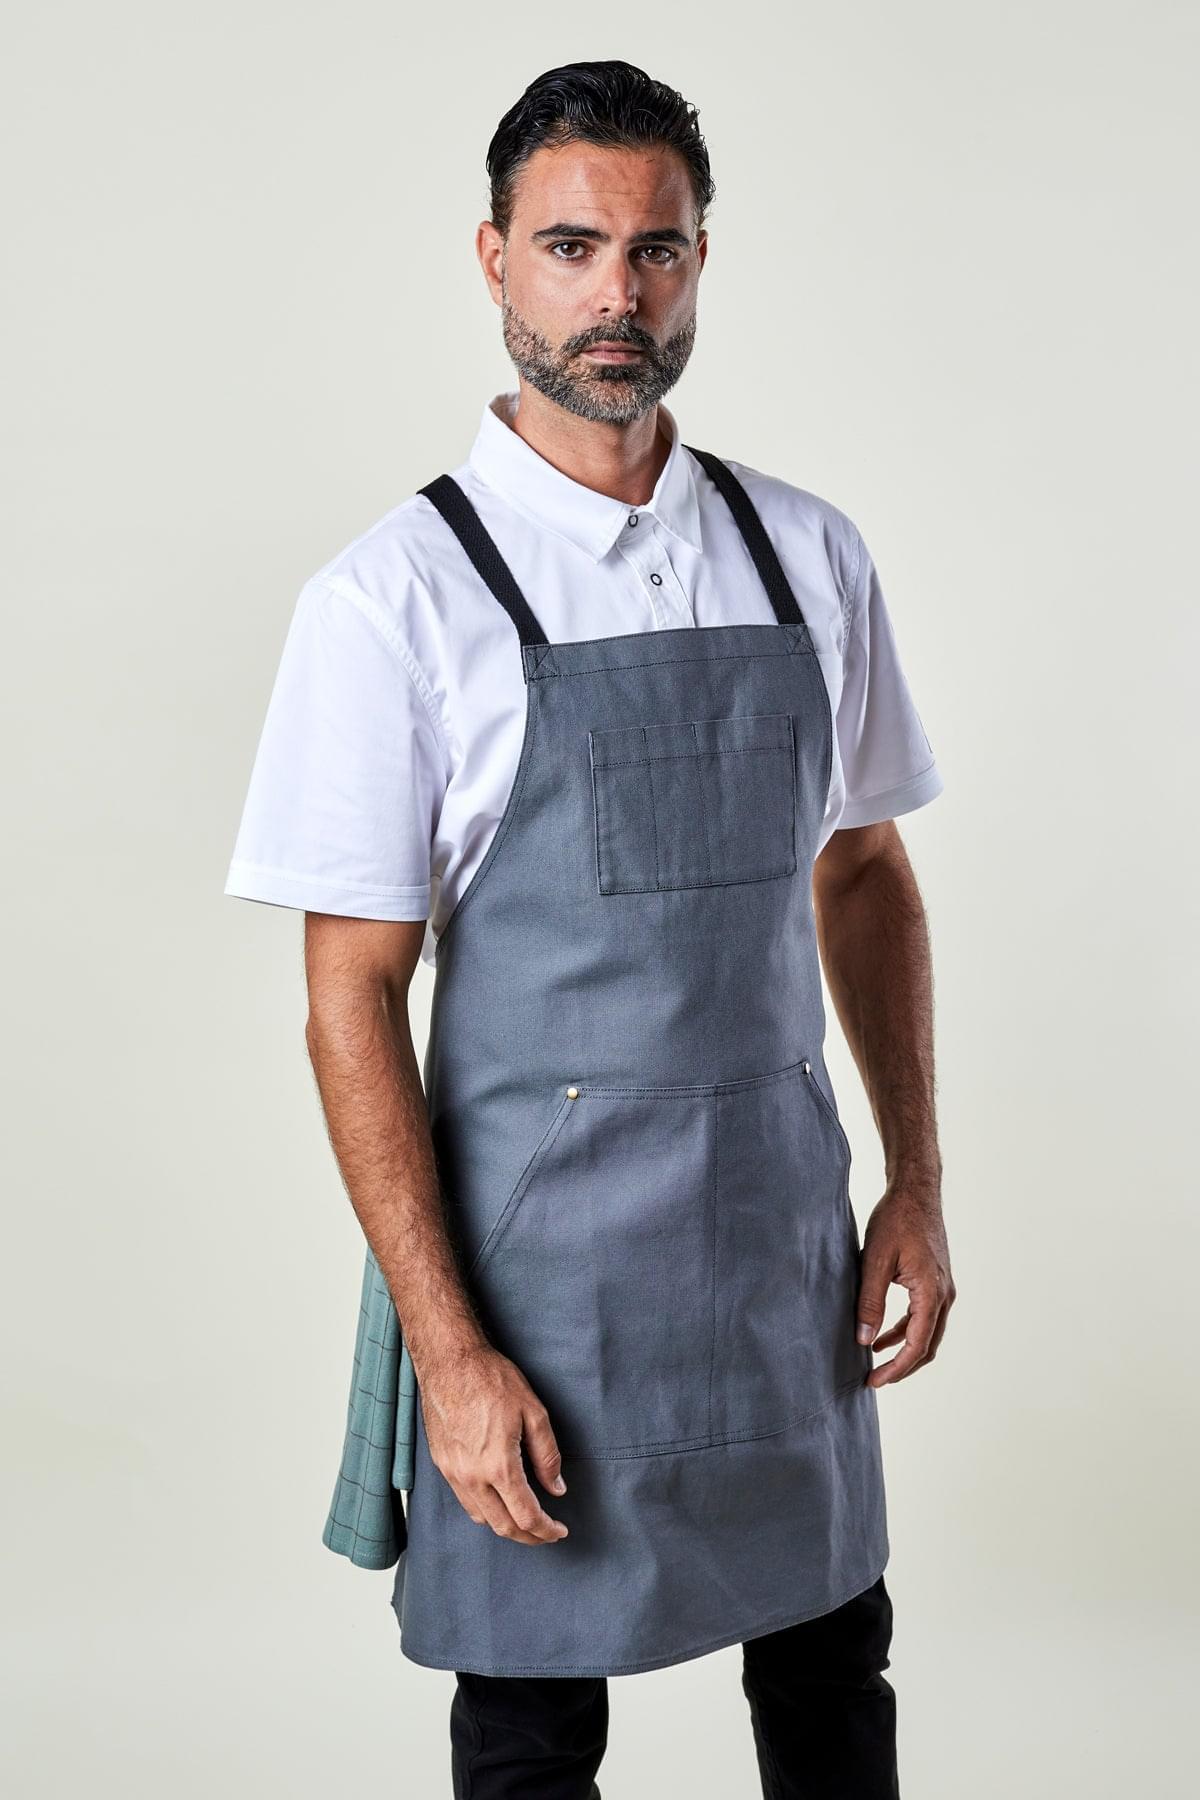 Buy Work Shirts - Custom Chef Shirts – BlueCut Aprons